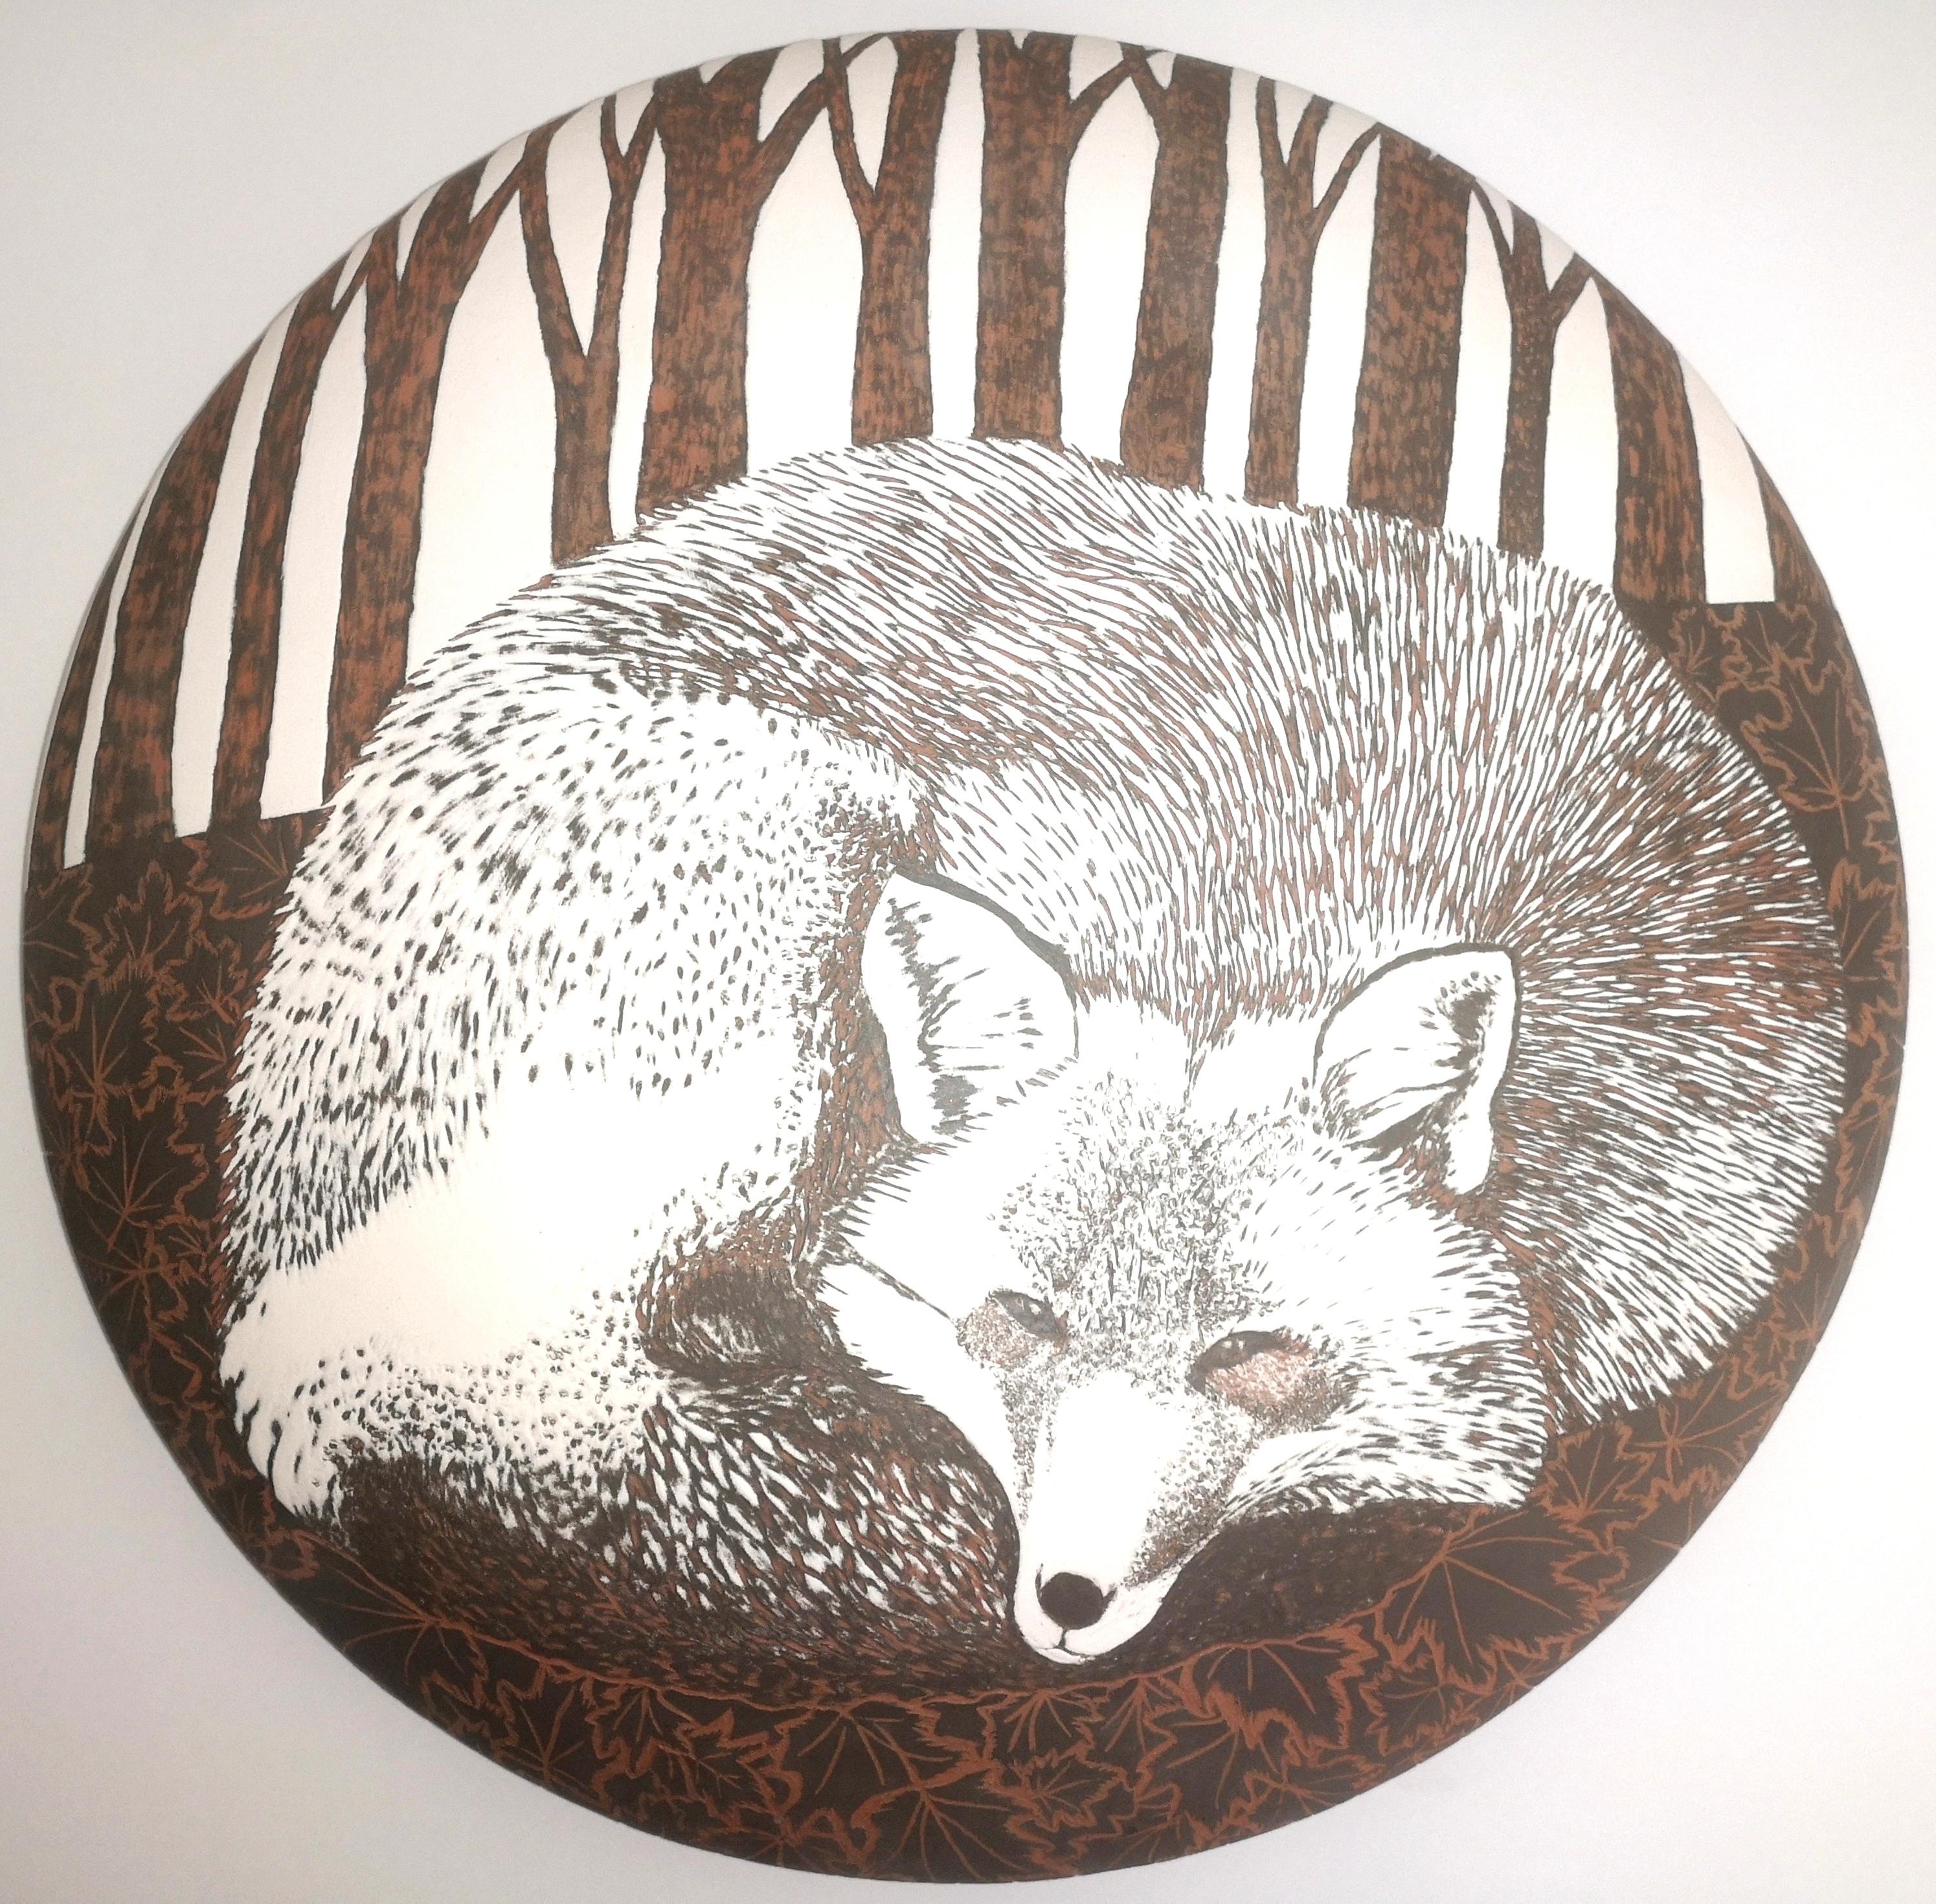 "Tondo - Fox", unique, original, céramique, sgraffite, animal, décoration murale - Mixed Media Art de Sabina Pelc